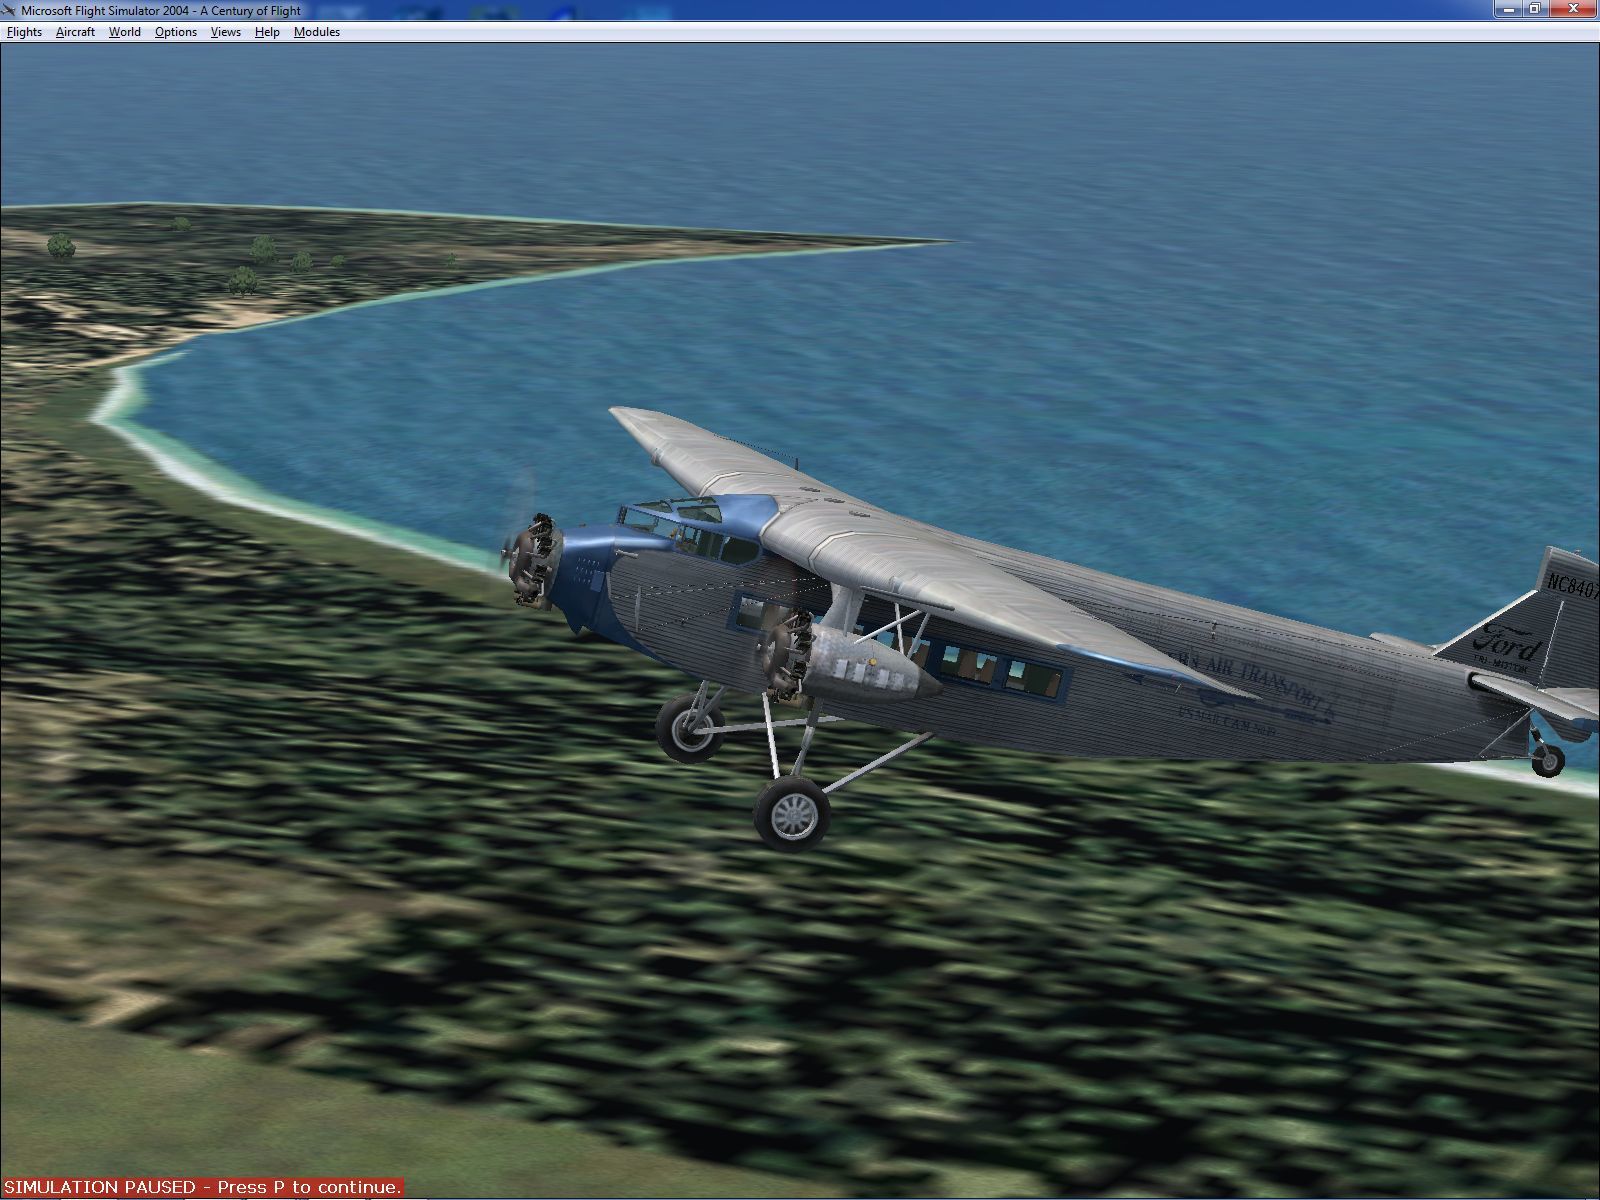 Microsoft flight simulator free download with crack